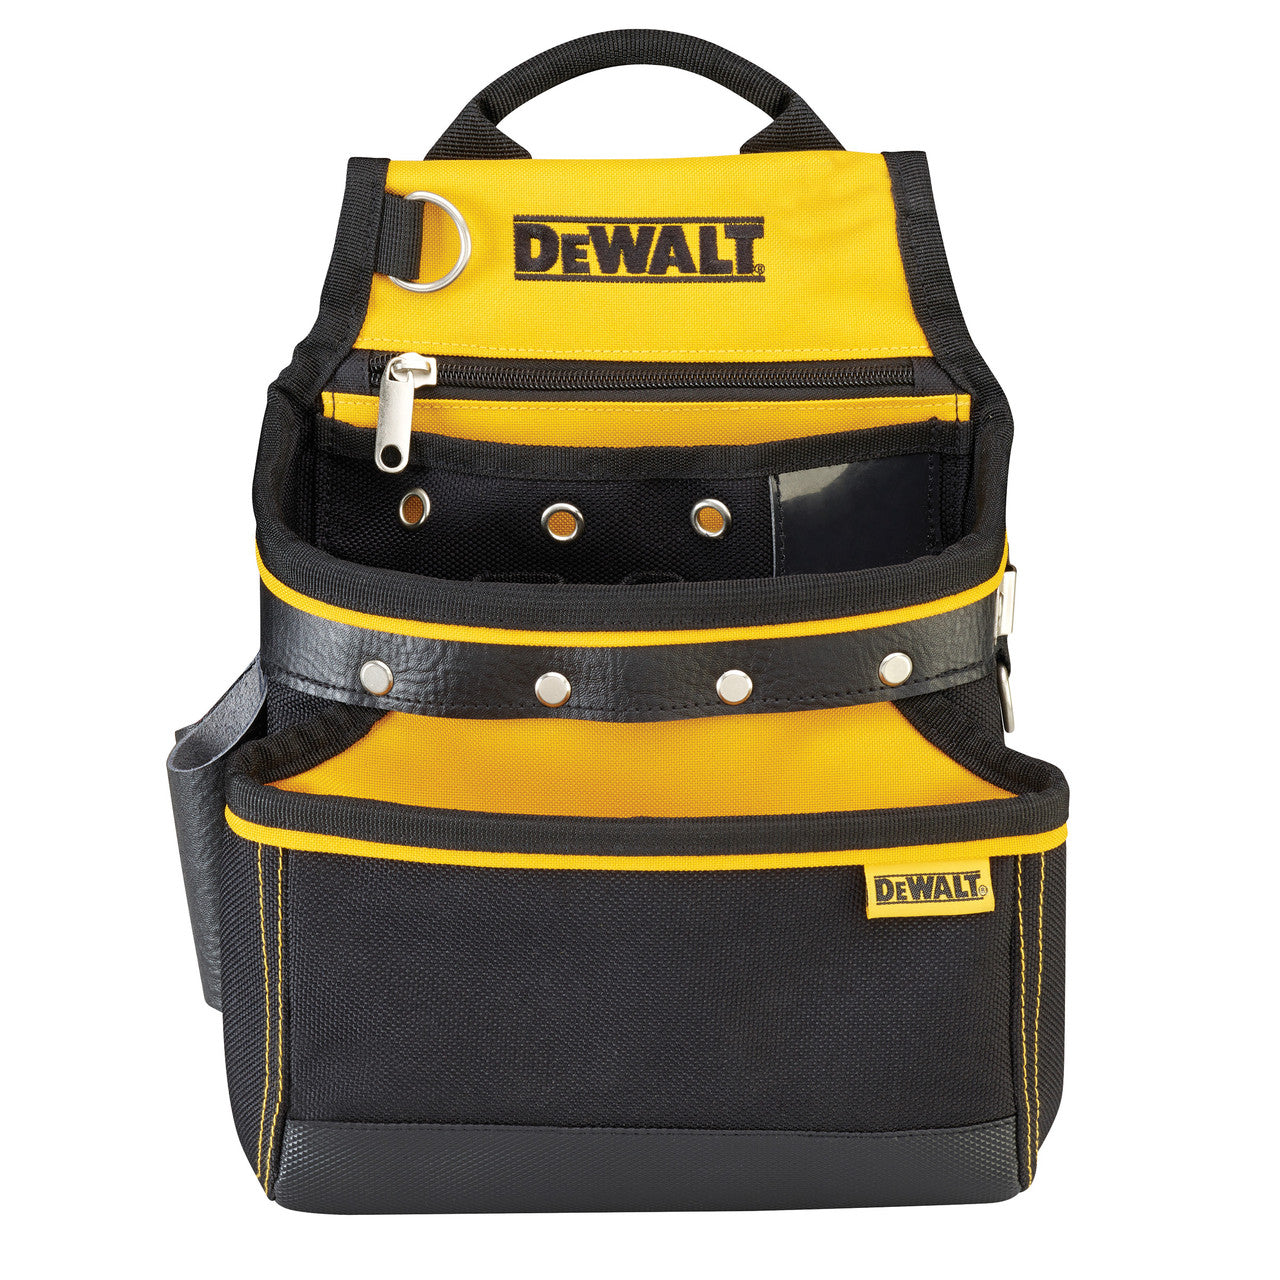 Dewalt DWST1-75551 Multi Purpose Pouch for Tool Belt